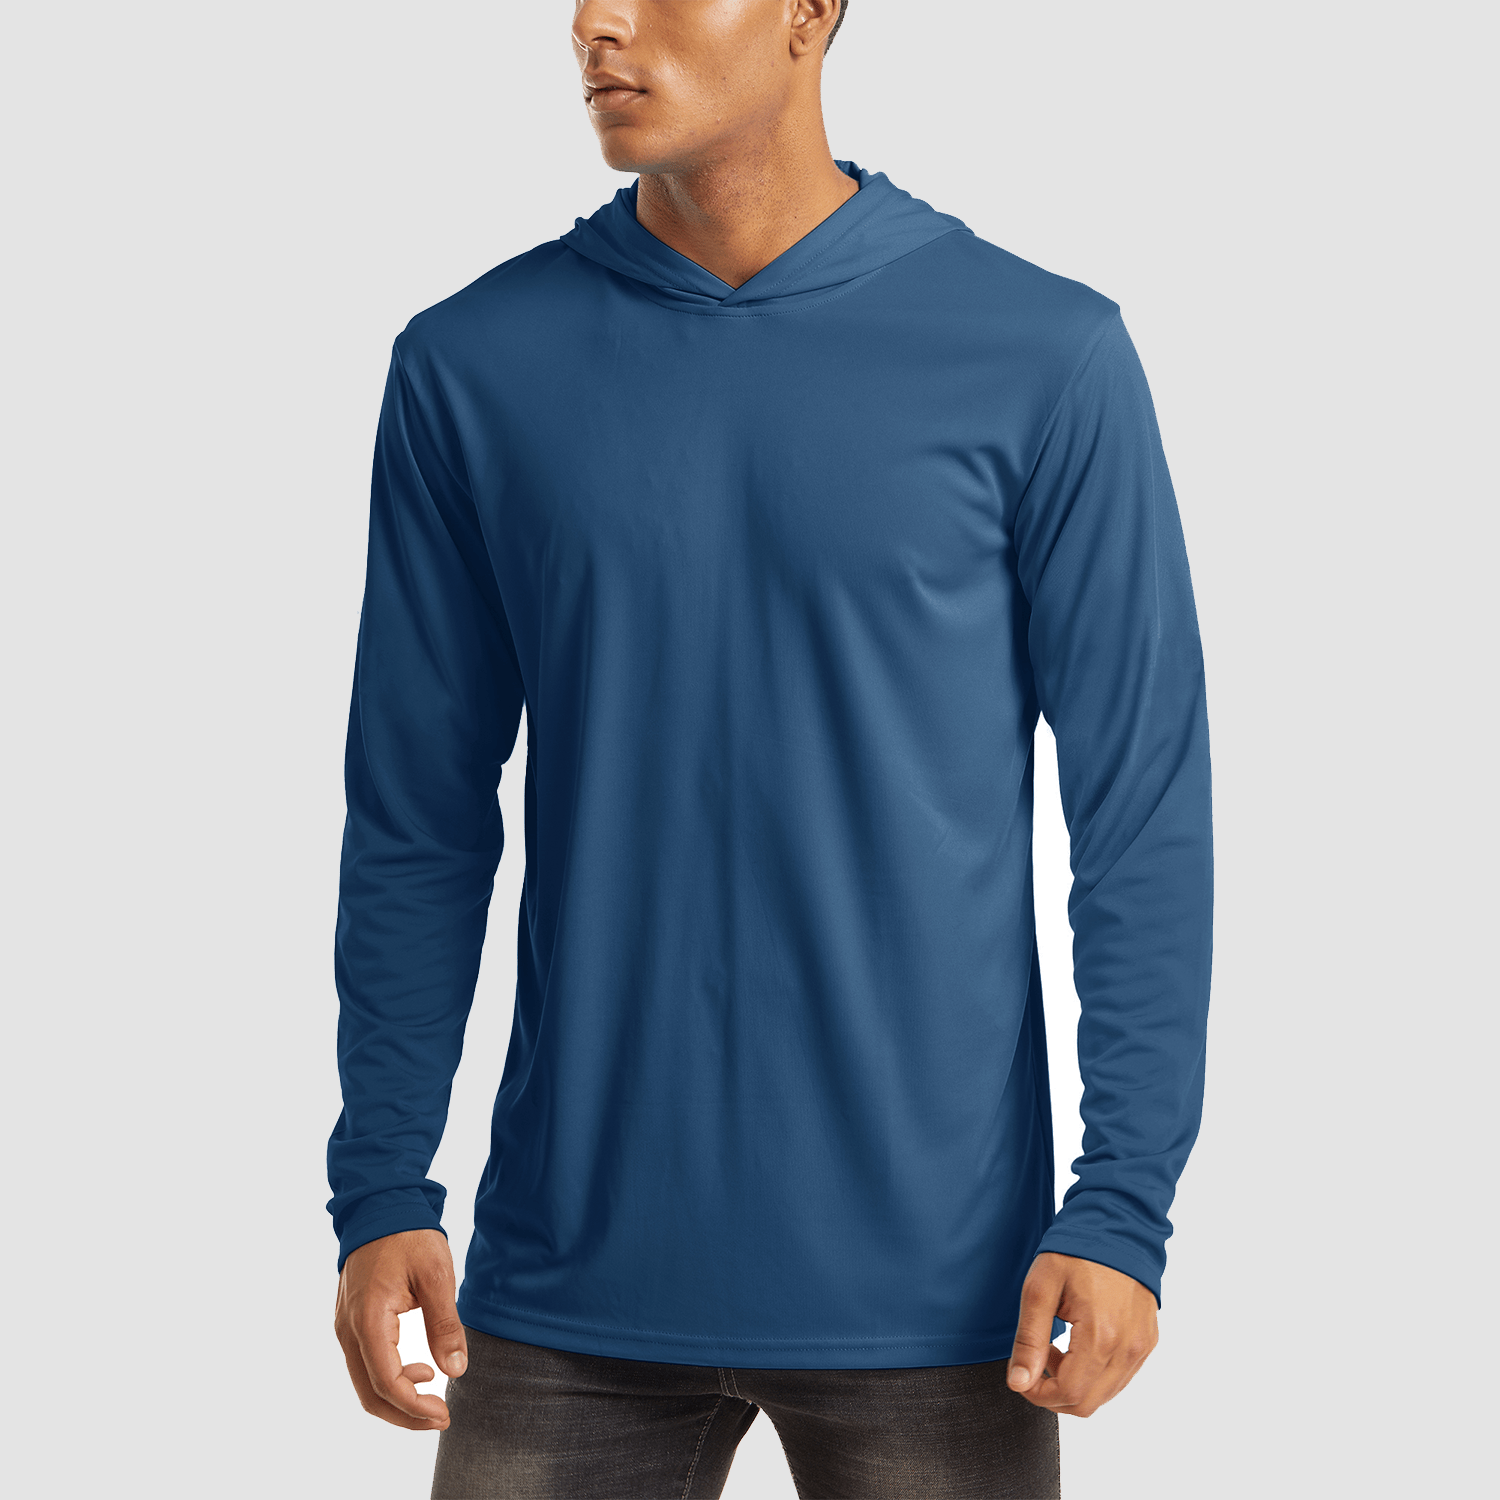 【Buy 4 Get 4th Free】Men's Long Sleeve Hooded Shirt UPF 50+ Athletic Shirts, Blue Grey / XS